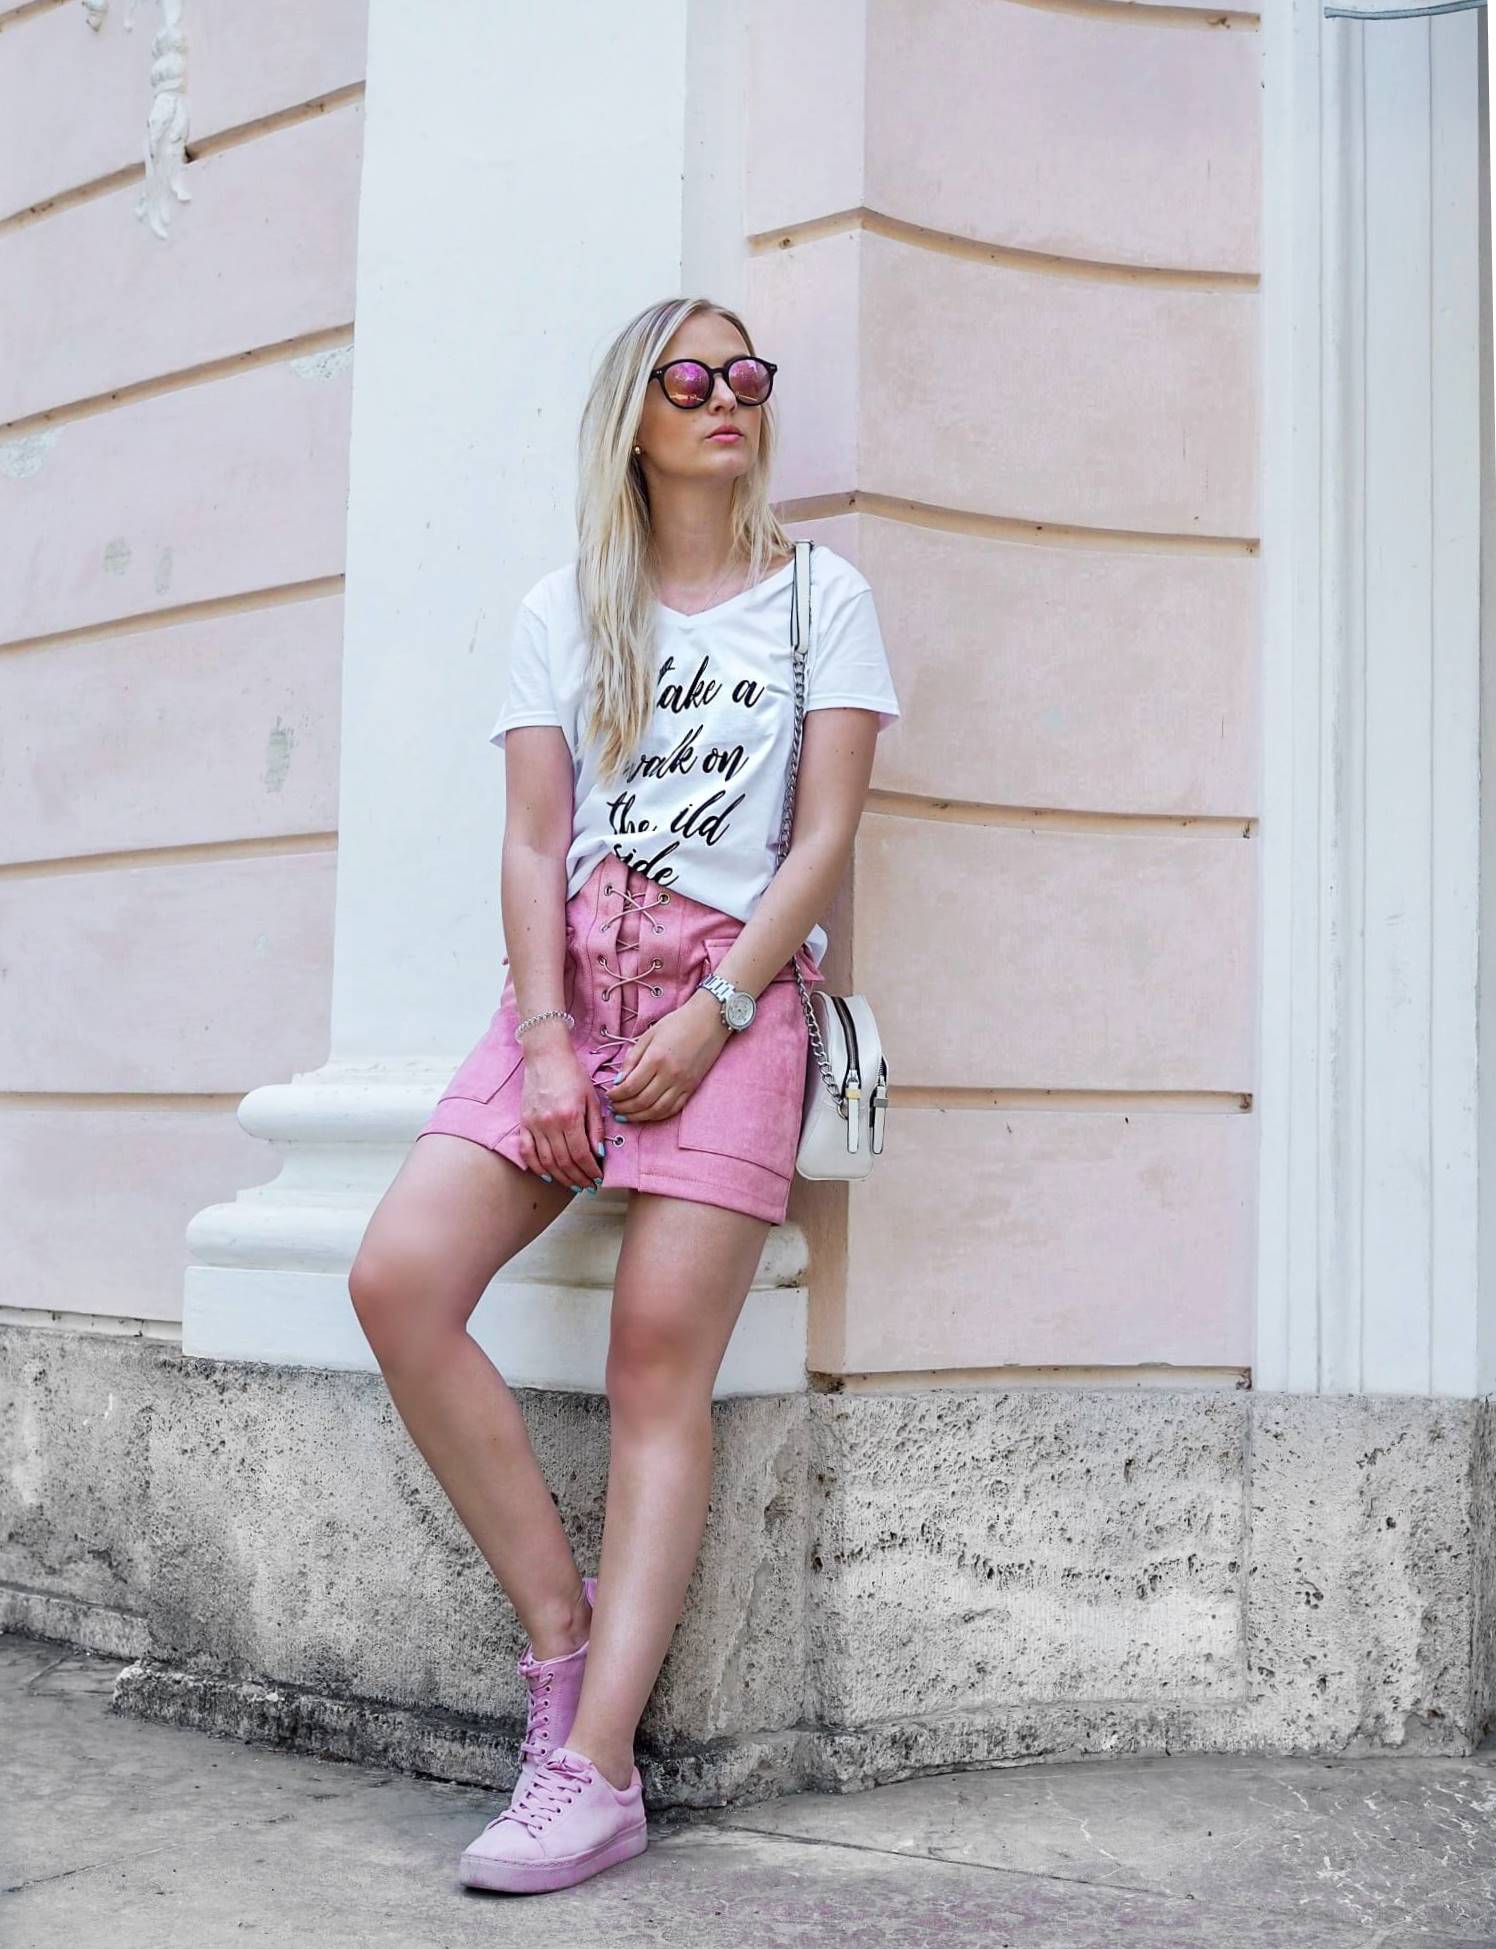 Modeblog Fashionblog Shirt bedrucken Katefully München Shirt selber bedrucken gestalten DIY ootd Modeoutfit Rock Top rosa Streetstyle Fashiontipps Designerin